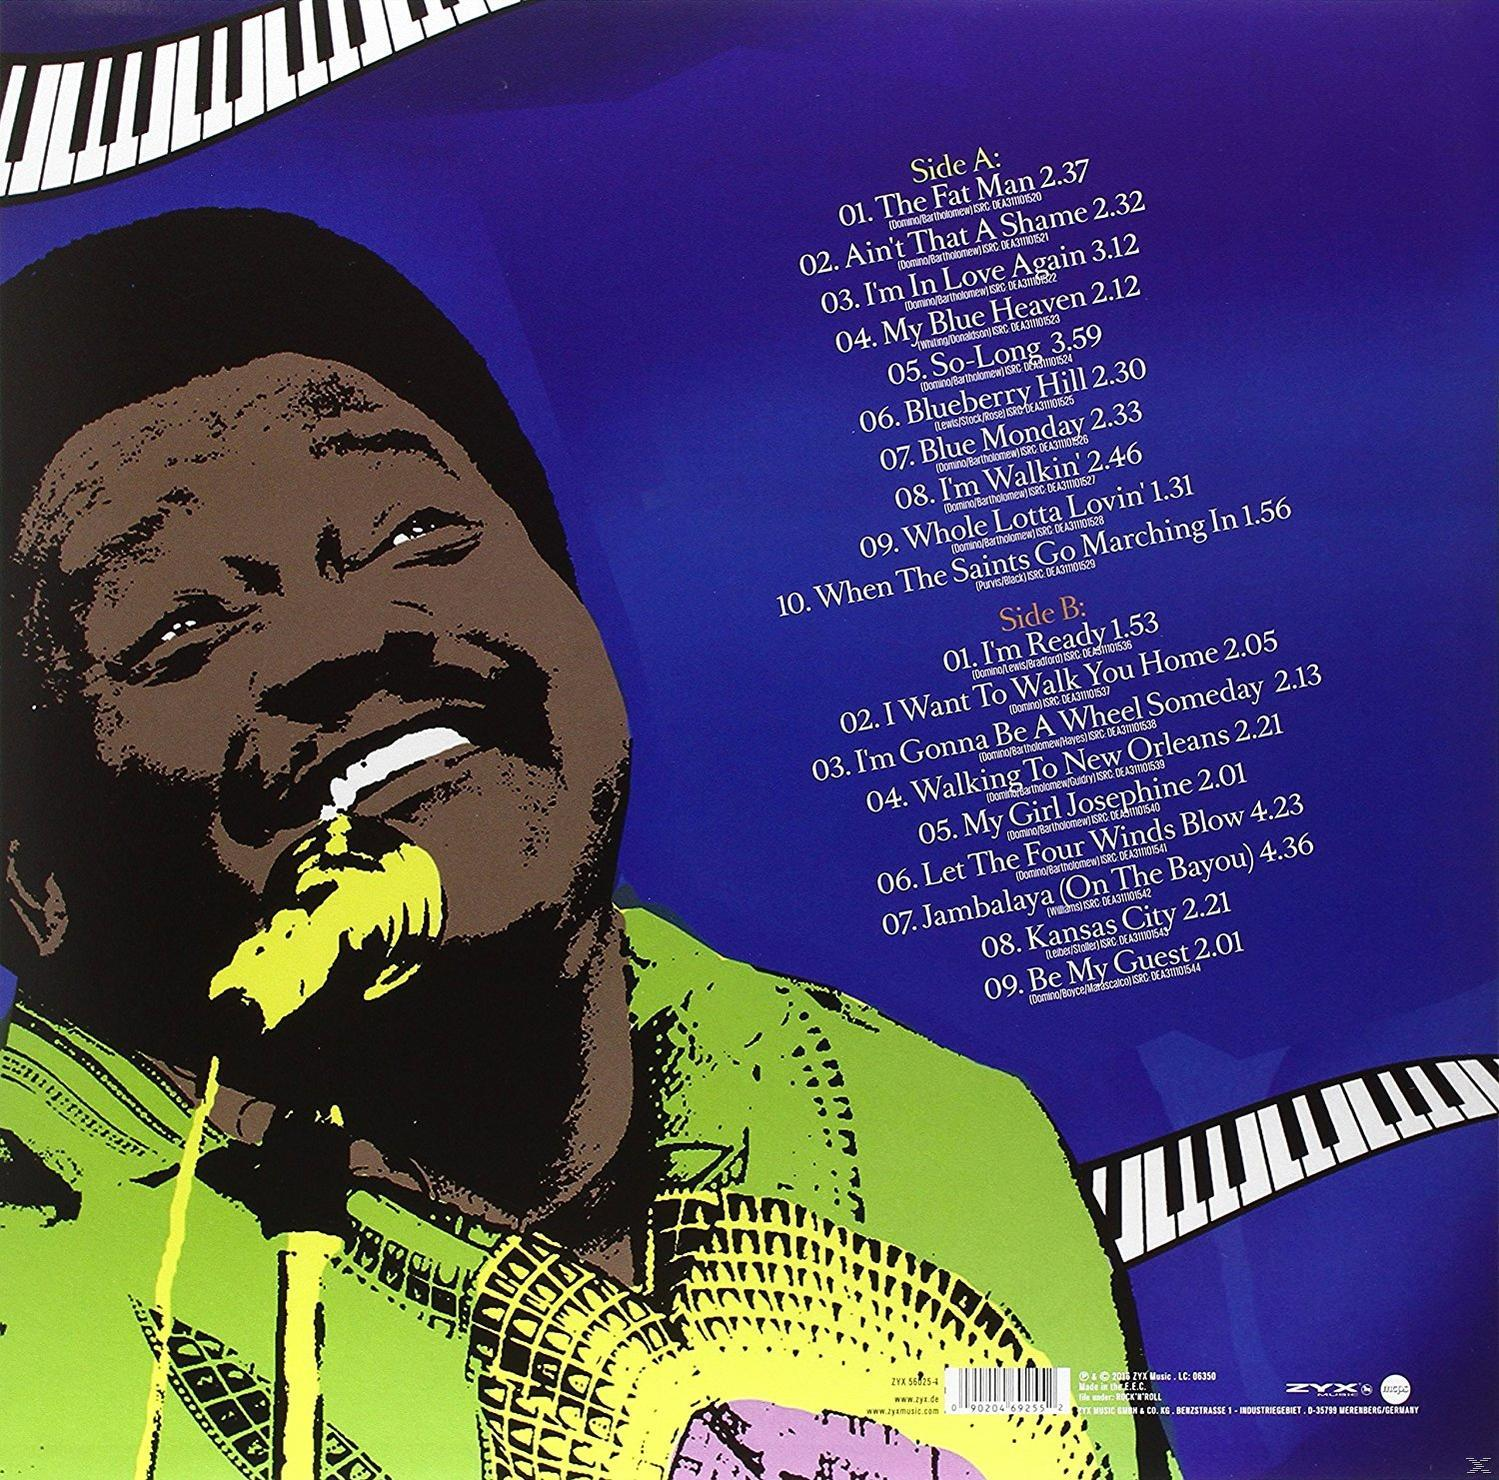 Fats Domino - Greatest Hits Walkin-His - I\'m (Vinyl)